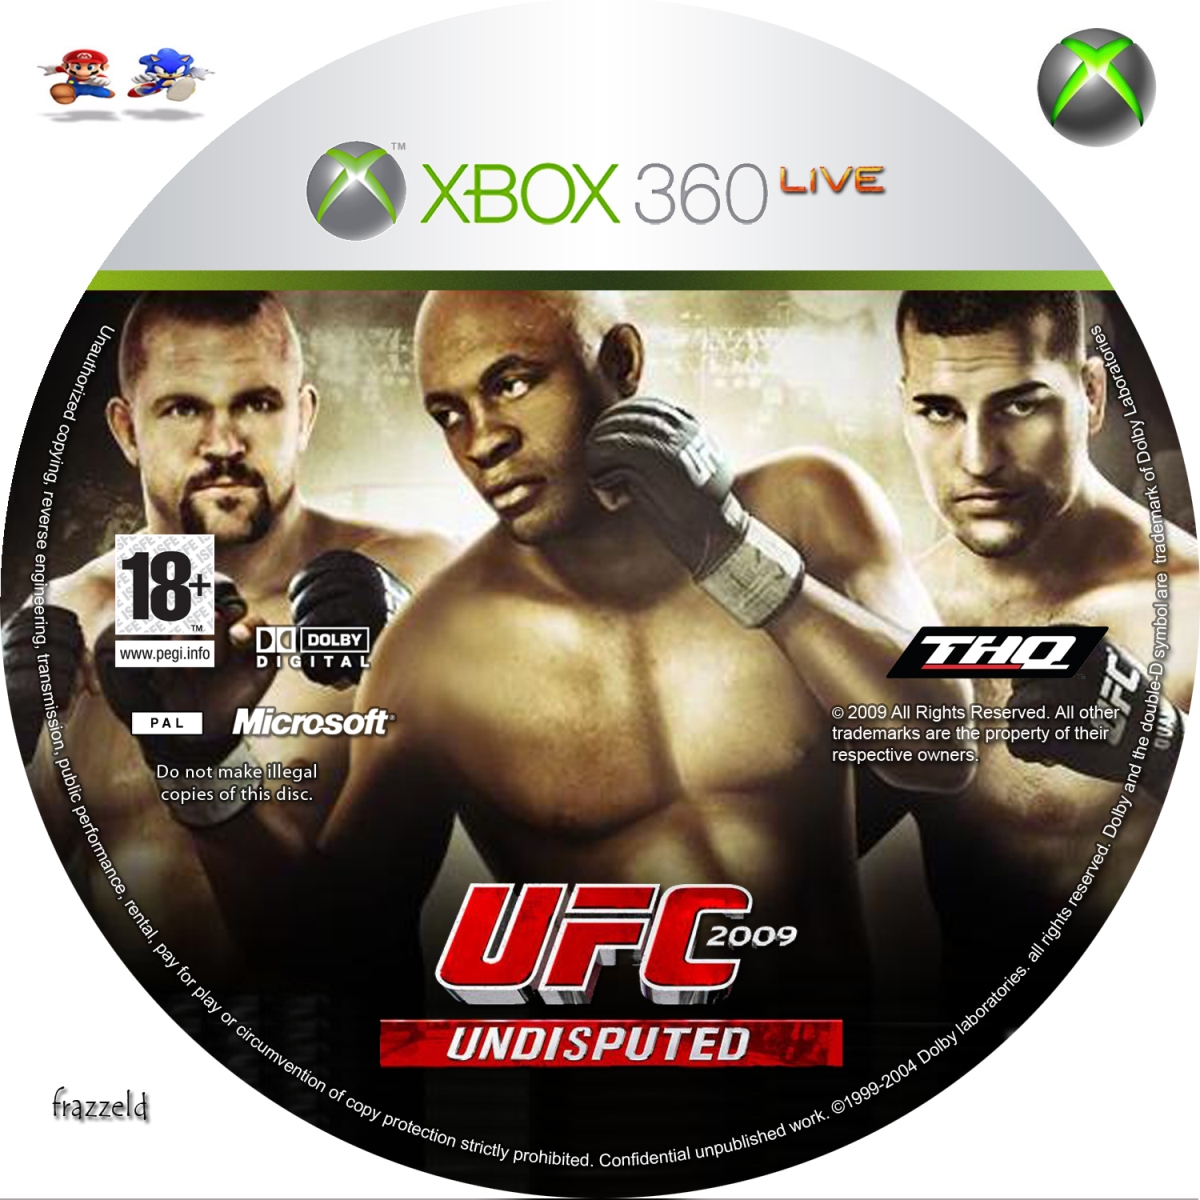 Игры на хвох. UFC 2009 Undisputed Xbox 360. UFC 3 Undisputed Xbox 360 диск. Обложка УФС 3 Xbox 360. Диск для Xbox 360 UFC 2.